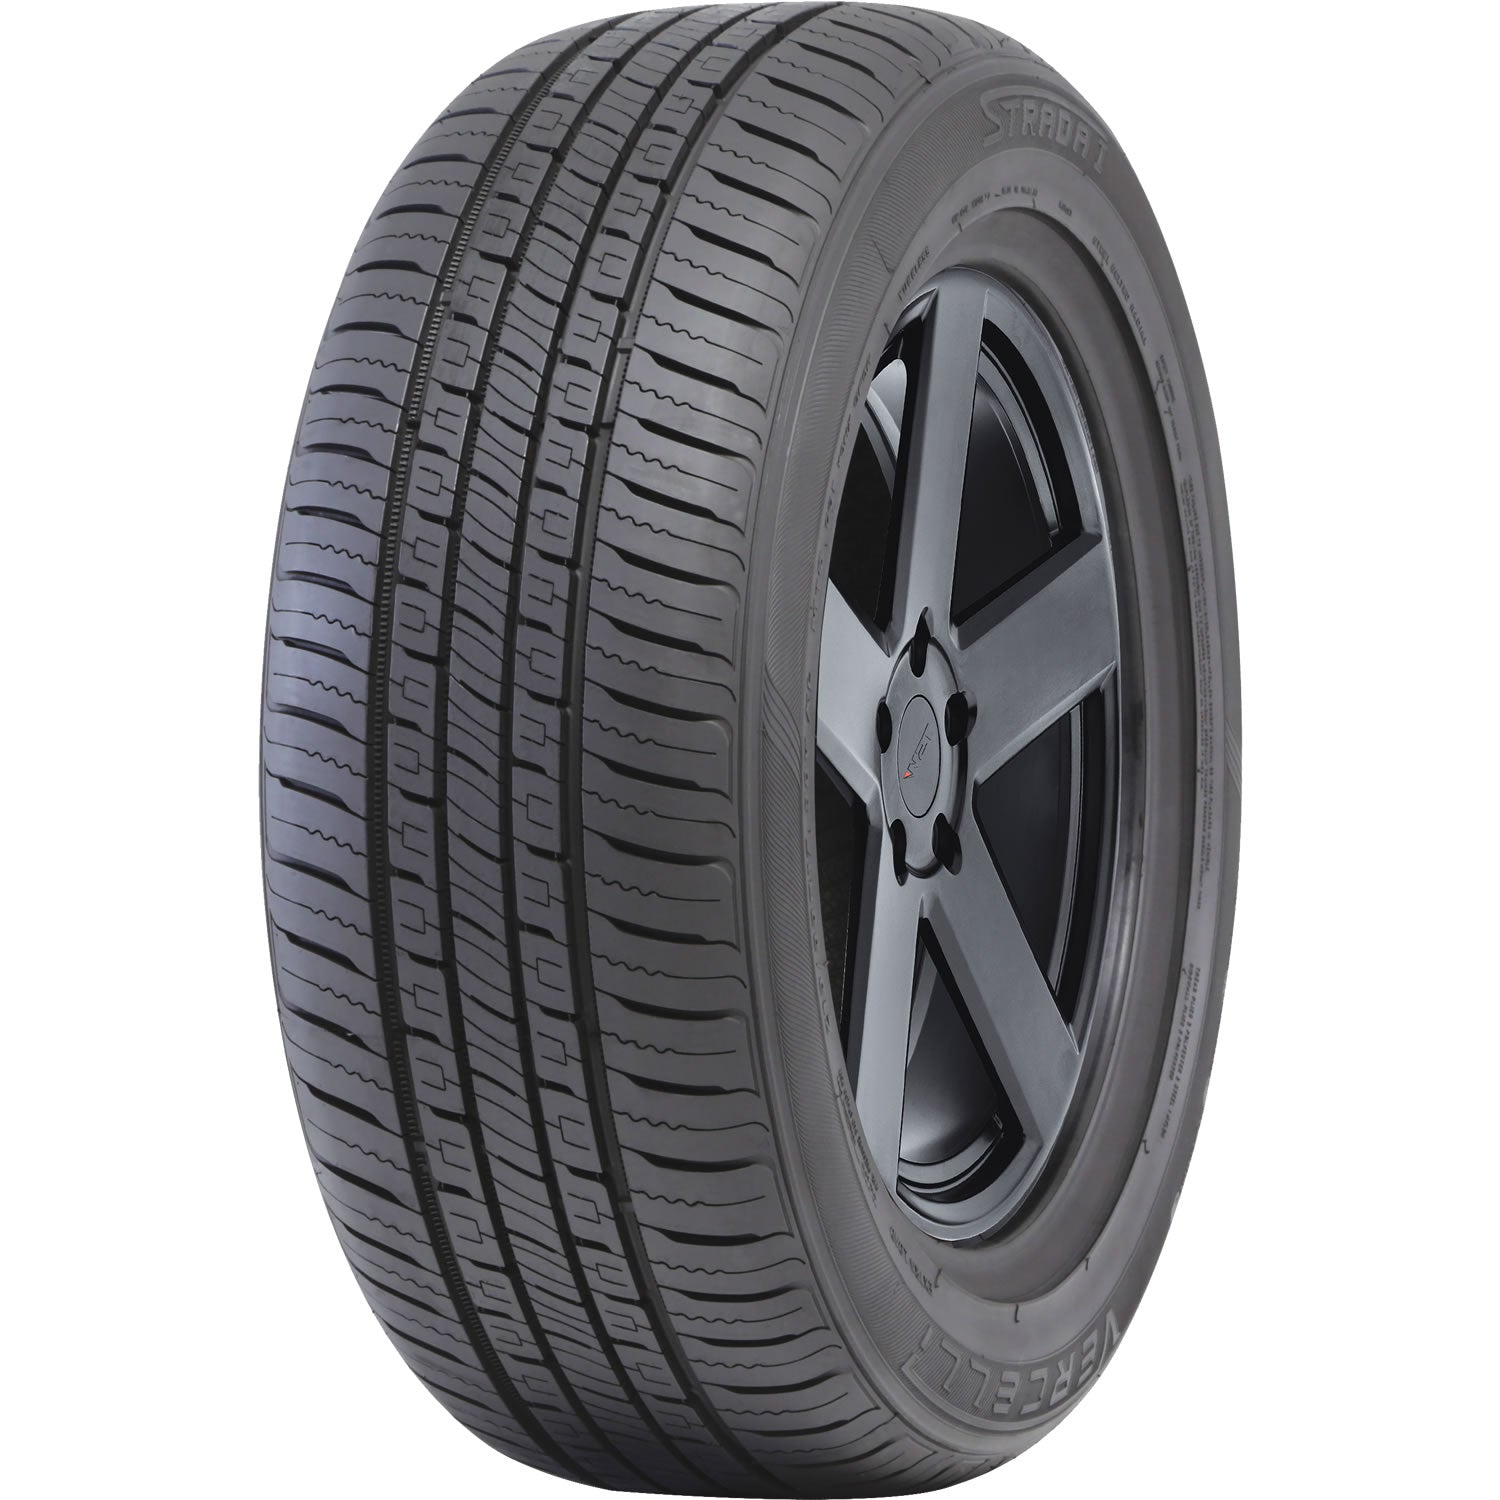 VERCELLI STRADA I 195/55R15 (23.4X7.9R 15) Tires